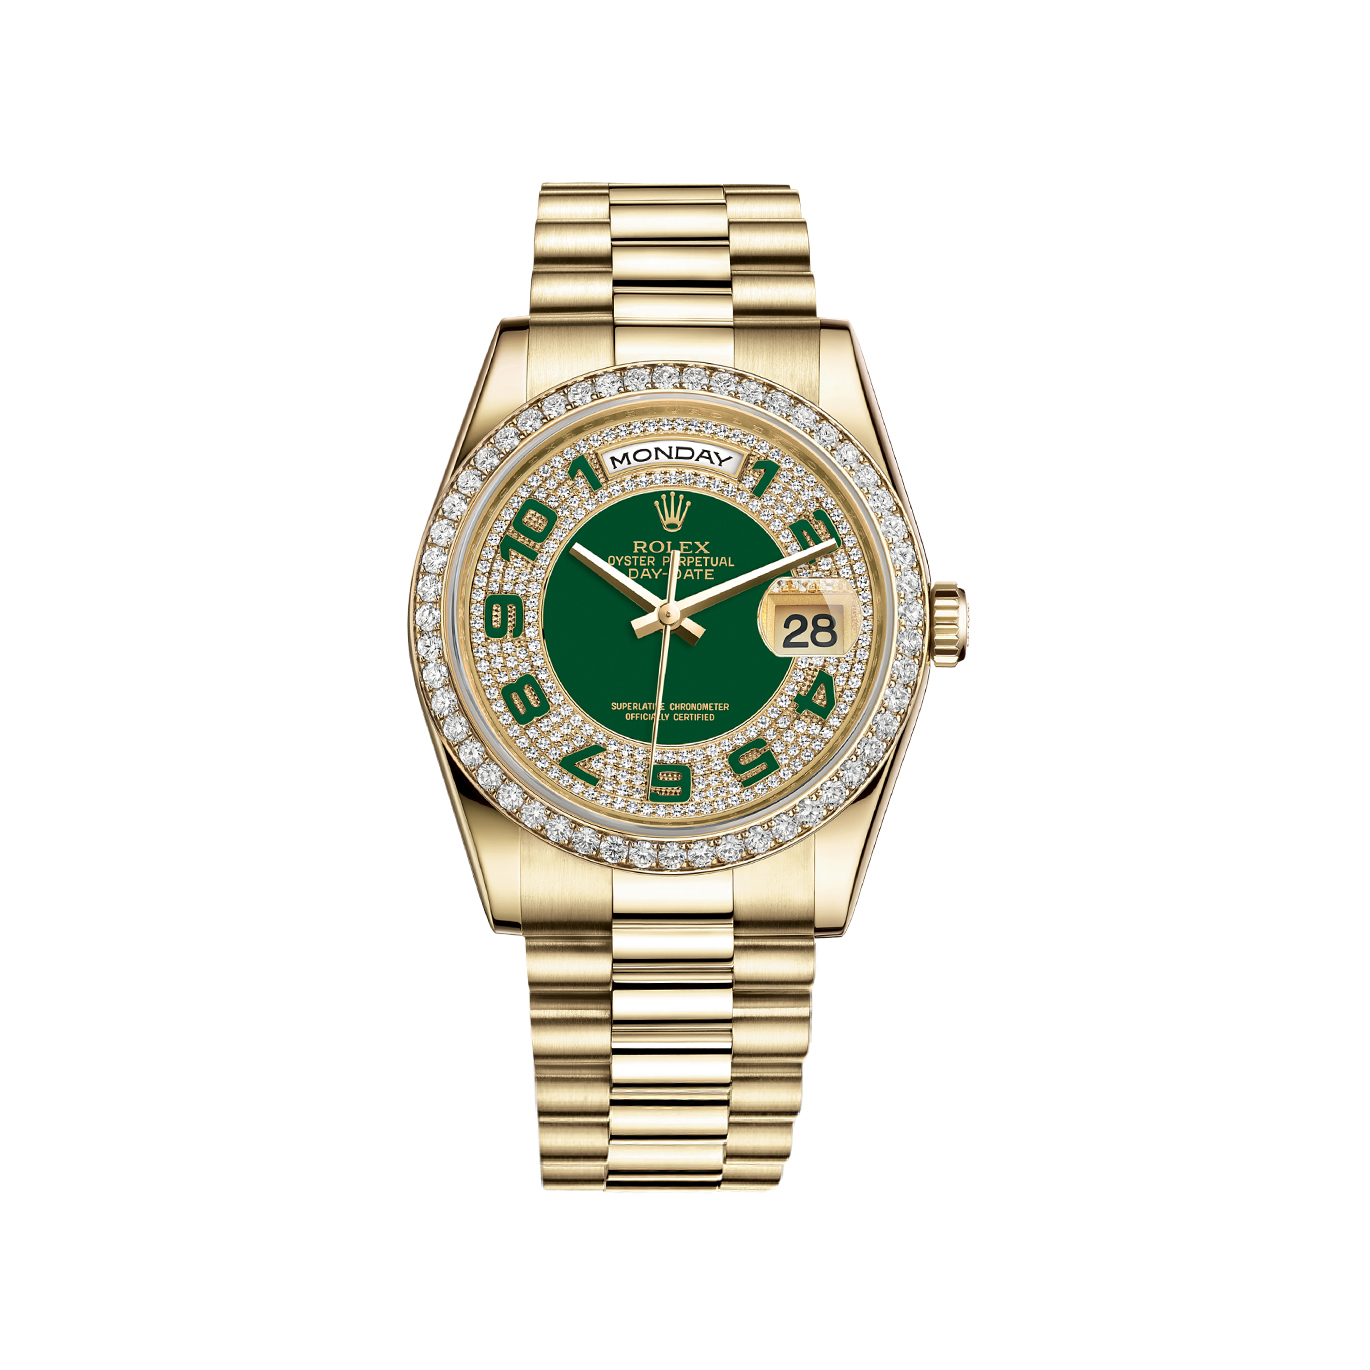 Day-Date 36 118348 Gold Watch (Green Diamond Paved)